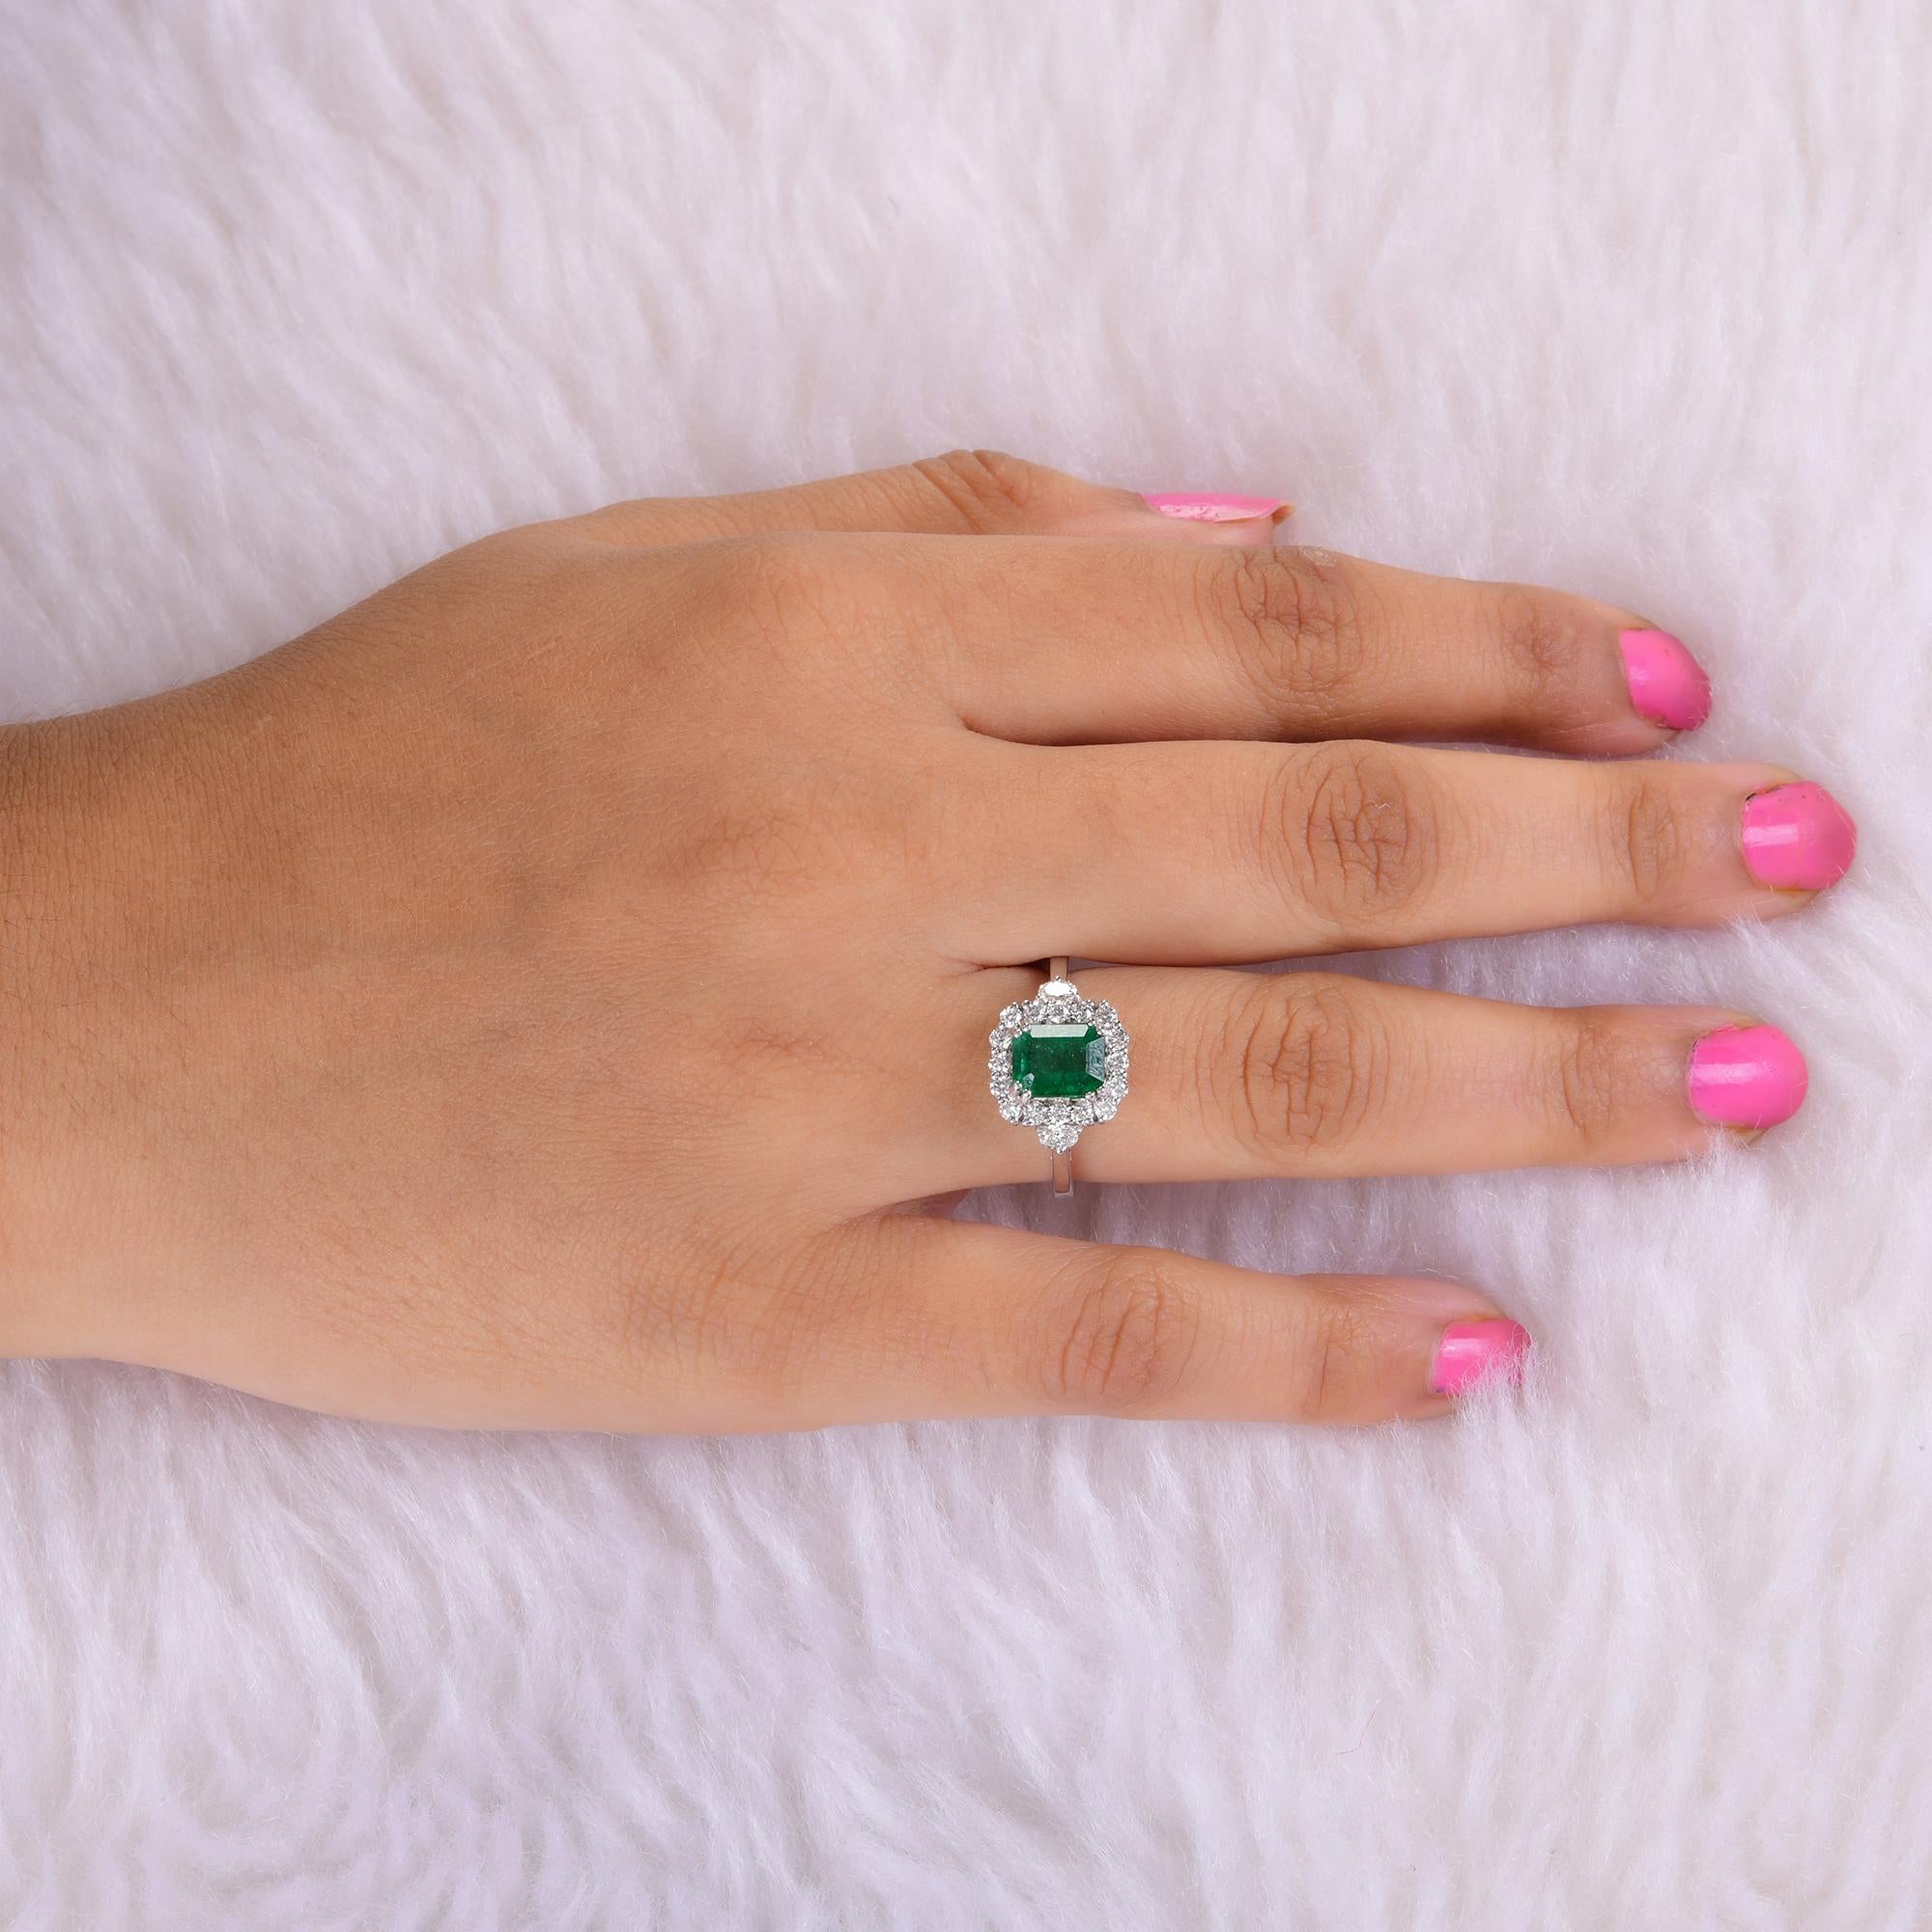 Octagon Cut Zambian Emerald Gemstone Cocktail Ring Diamond 18 Karat White Gold Fine Jewelry For Sale